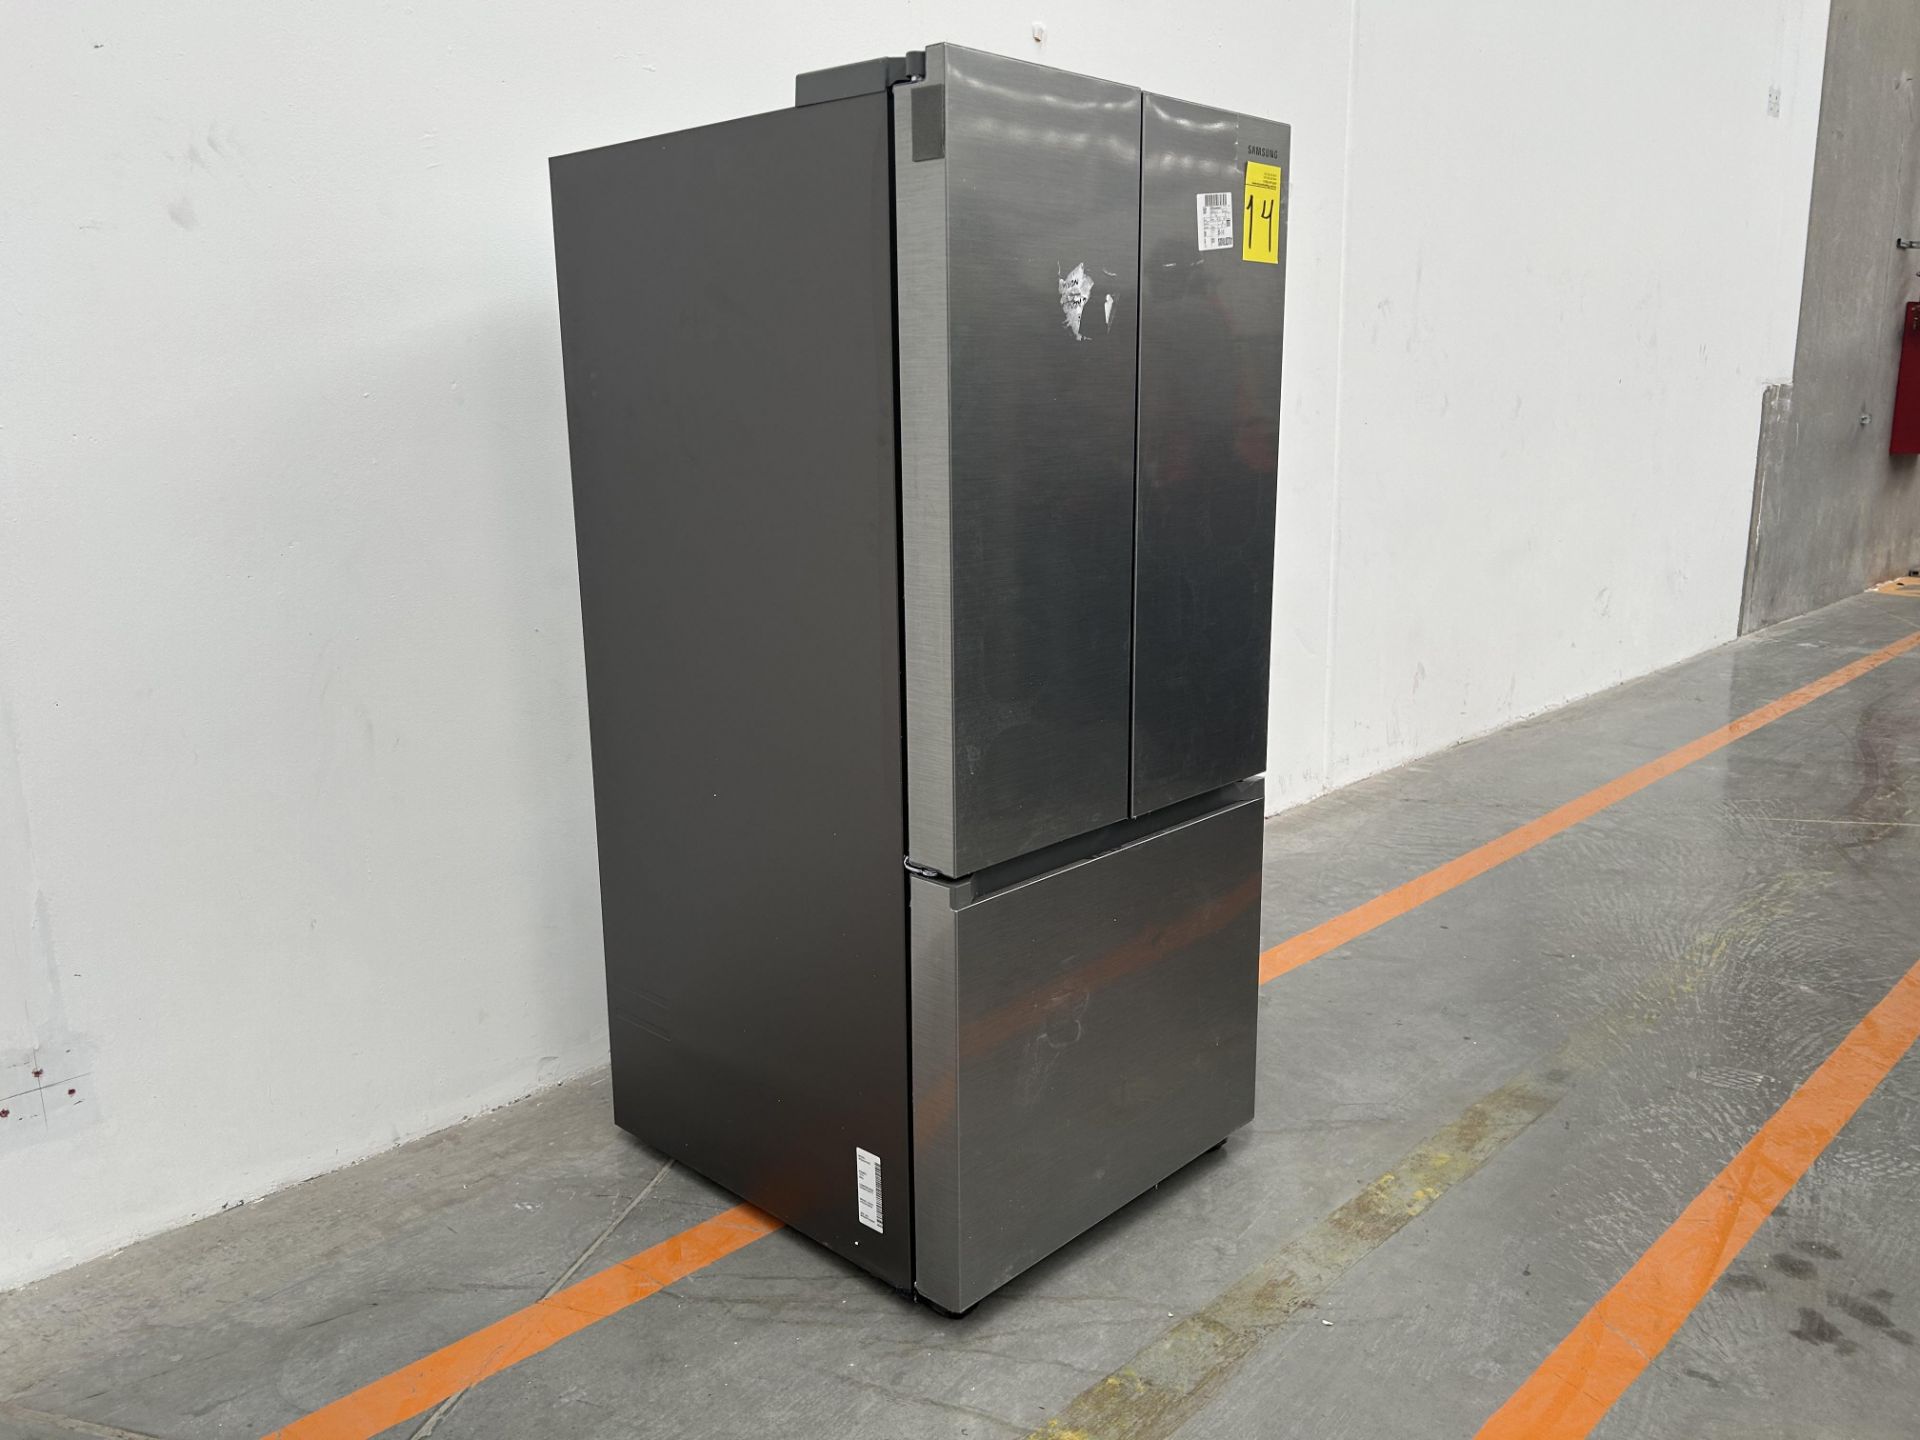 (NUEVO) Refrigerador Marca SAMSUNG, Modelo RF22A410S9, Serie 01694K, Color GRIS - Image 2 of 4